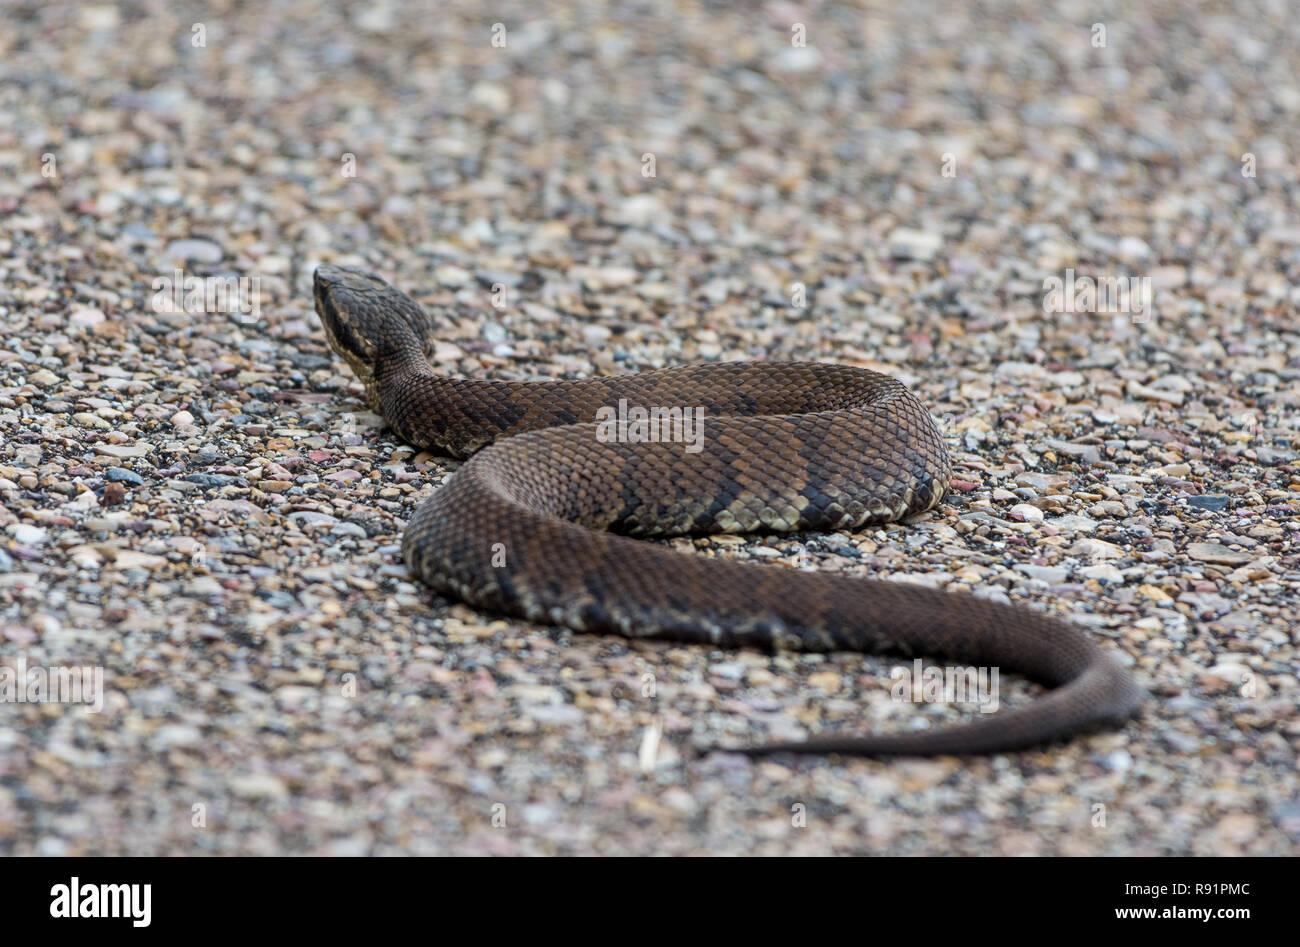 Cottonmouth snake (Agkistrodon piscivorus), a species of venomous pit viper found in SE United States. Aransas National Wildlife Refuge, Texas, USA. Stock Photo